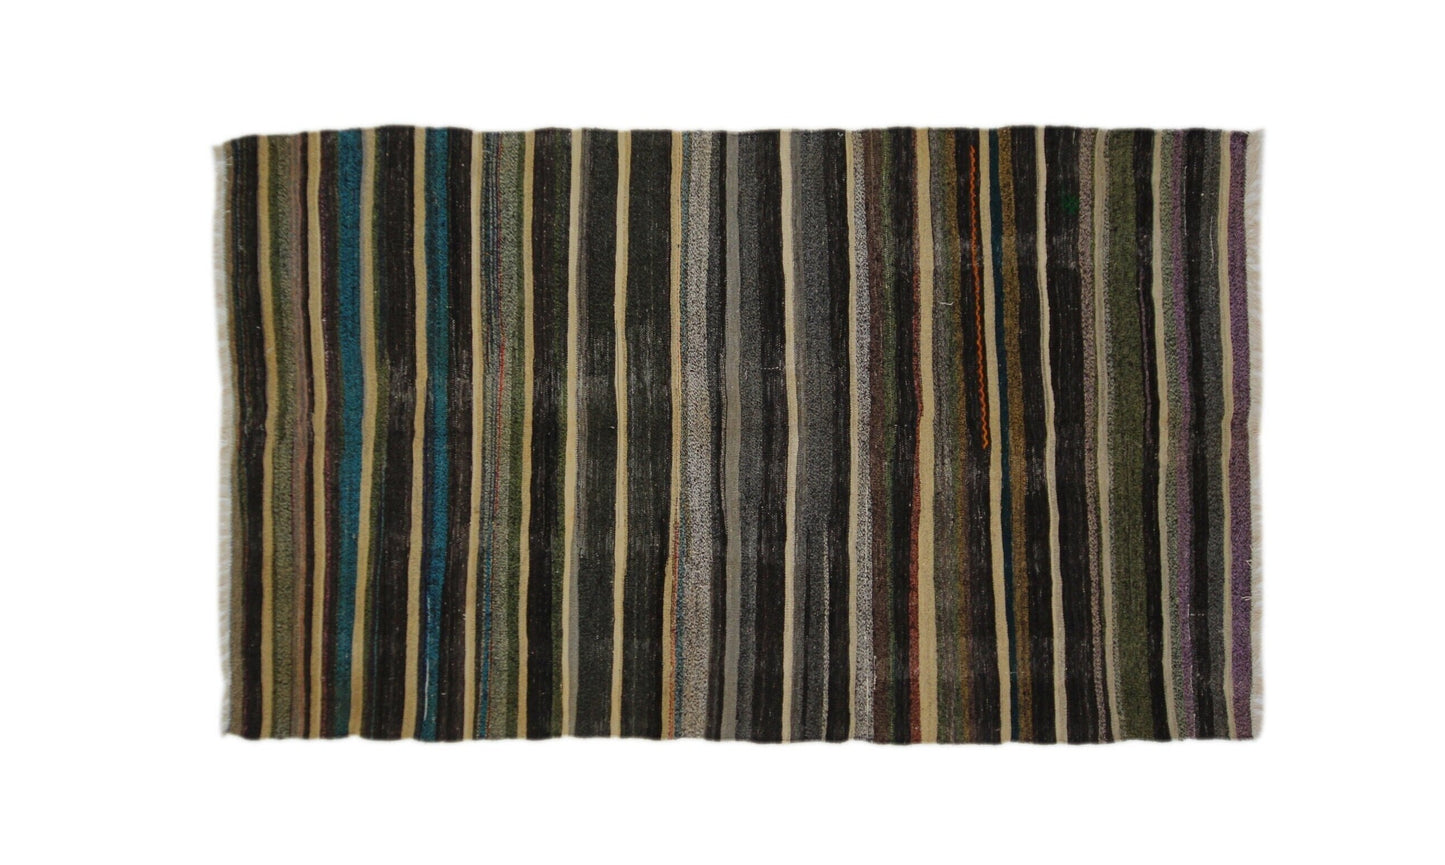 Goat hair Vintage Turkish Kilim rug 6x9, Unique Hard coal Handmade Area rug, Boho Rag Rug, Turkey rug, Fine rug, Kilim rug rag, 7762